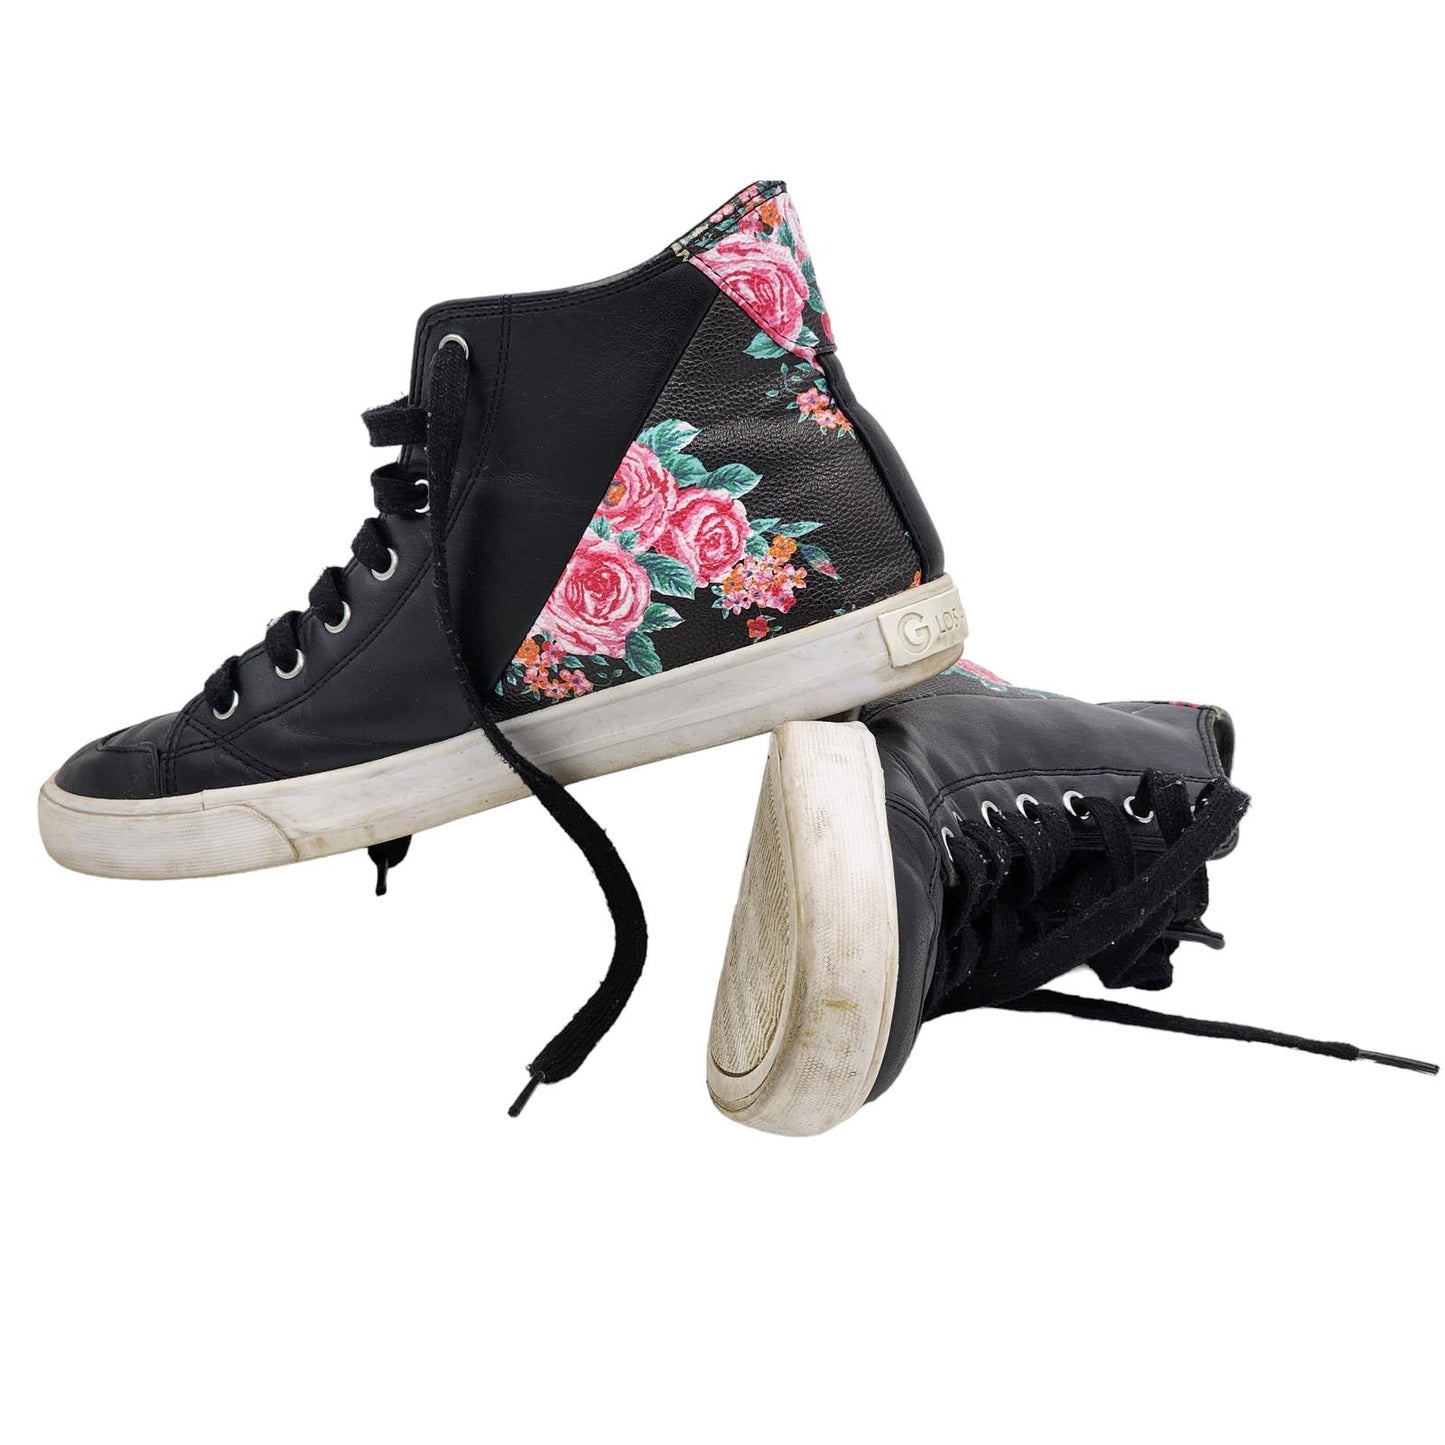 GBG Los Angeles Shoes Womens Size 8.5 Merica High Top Sneaker Floral Streetwear